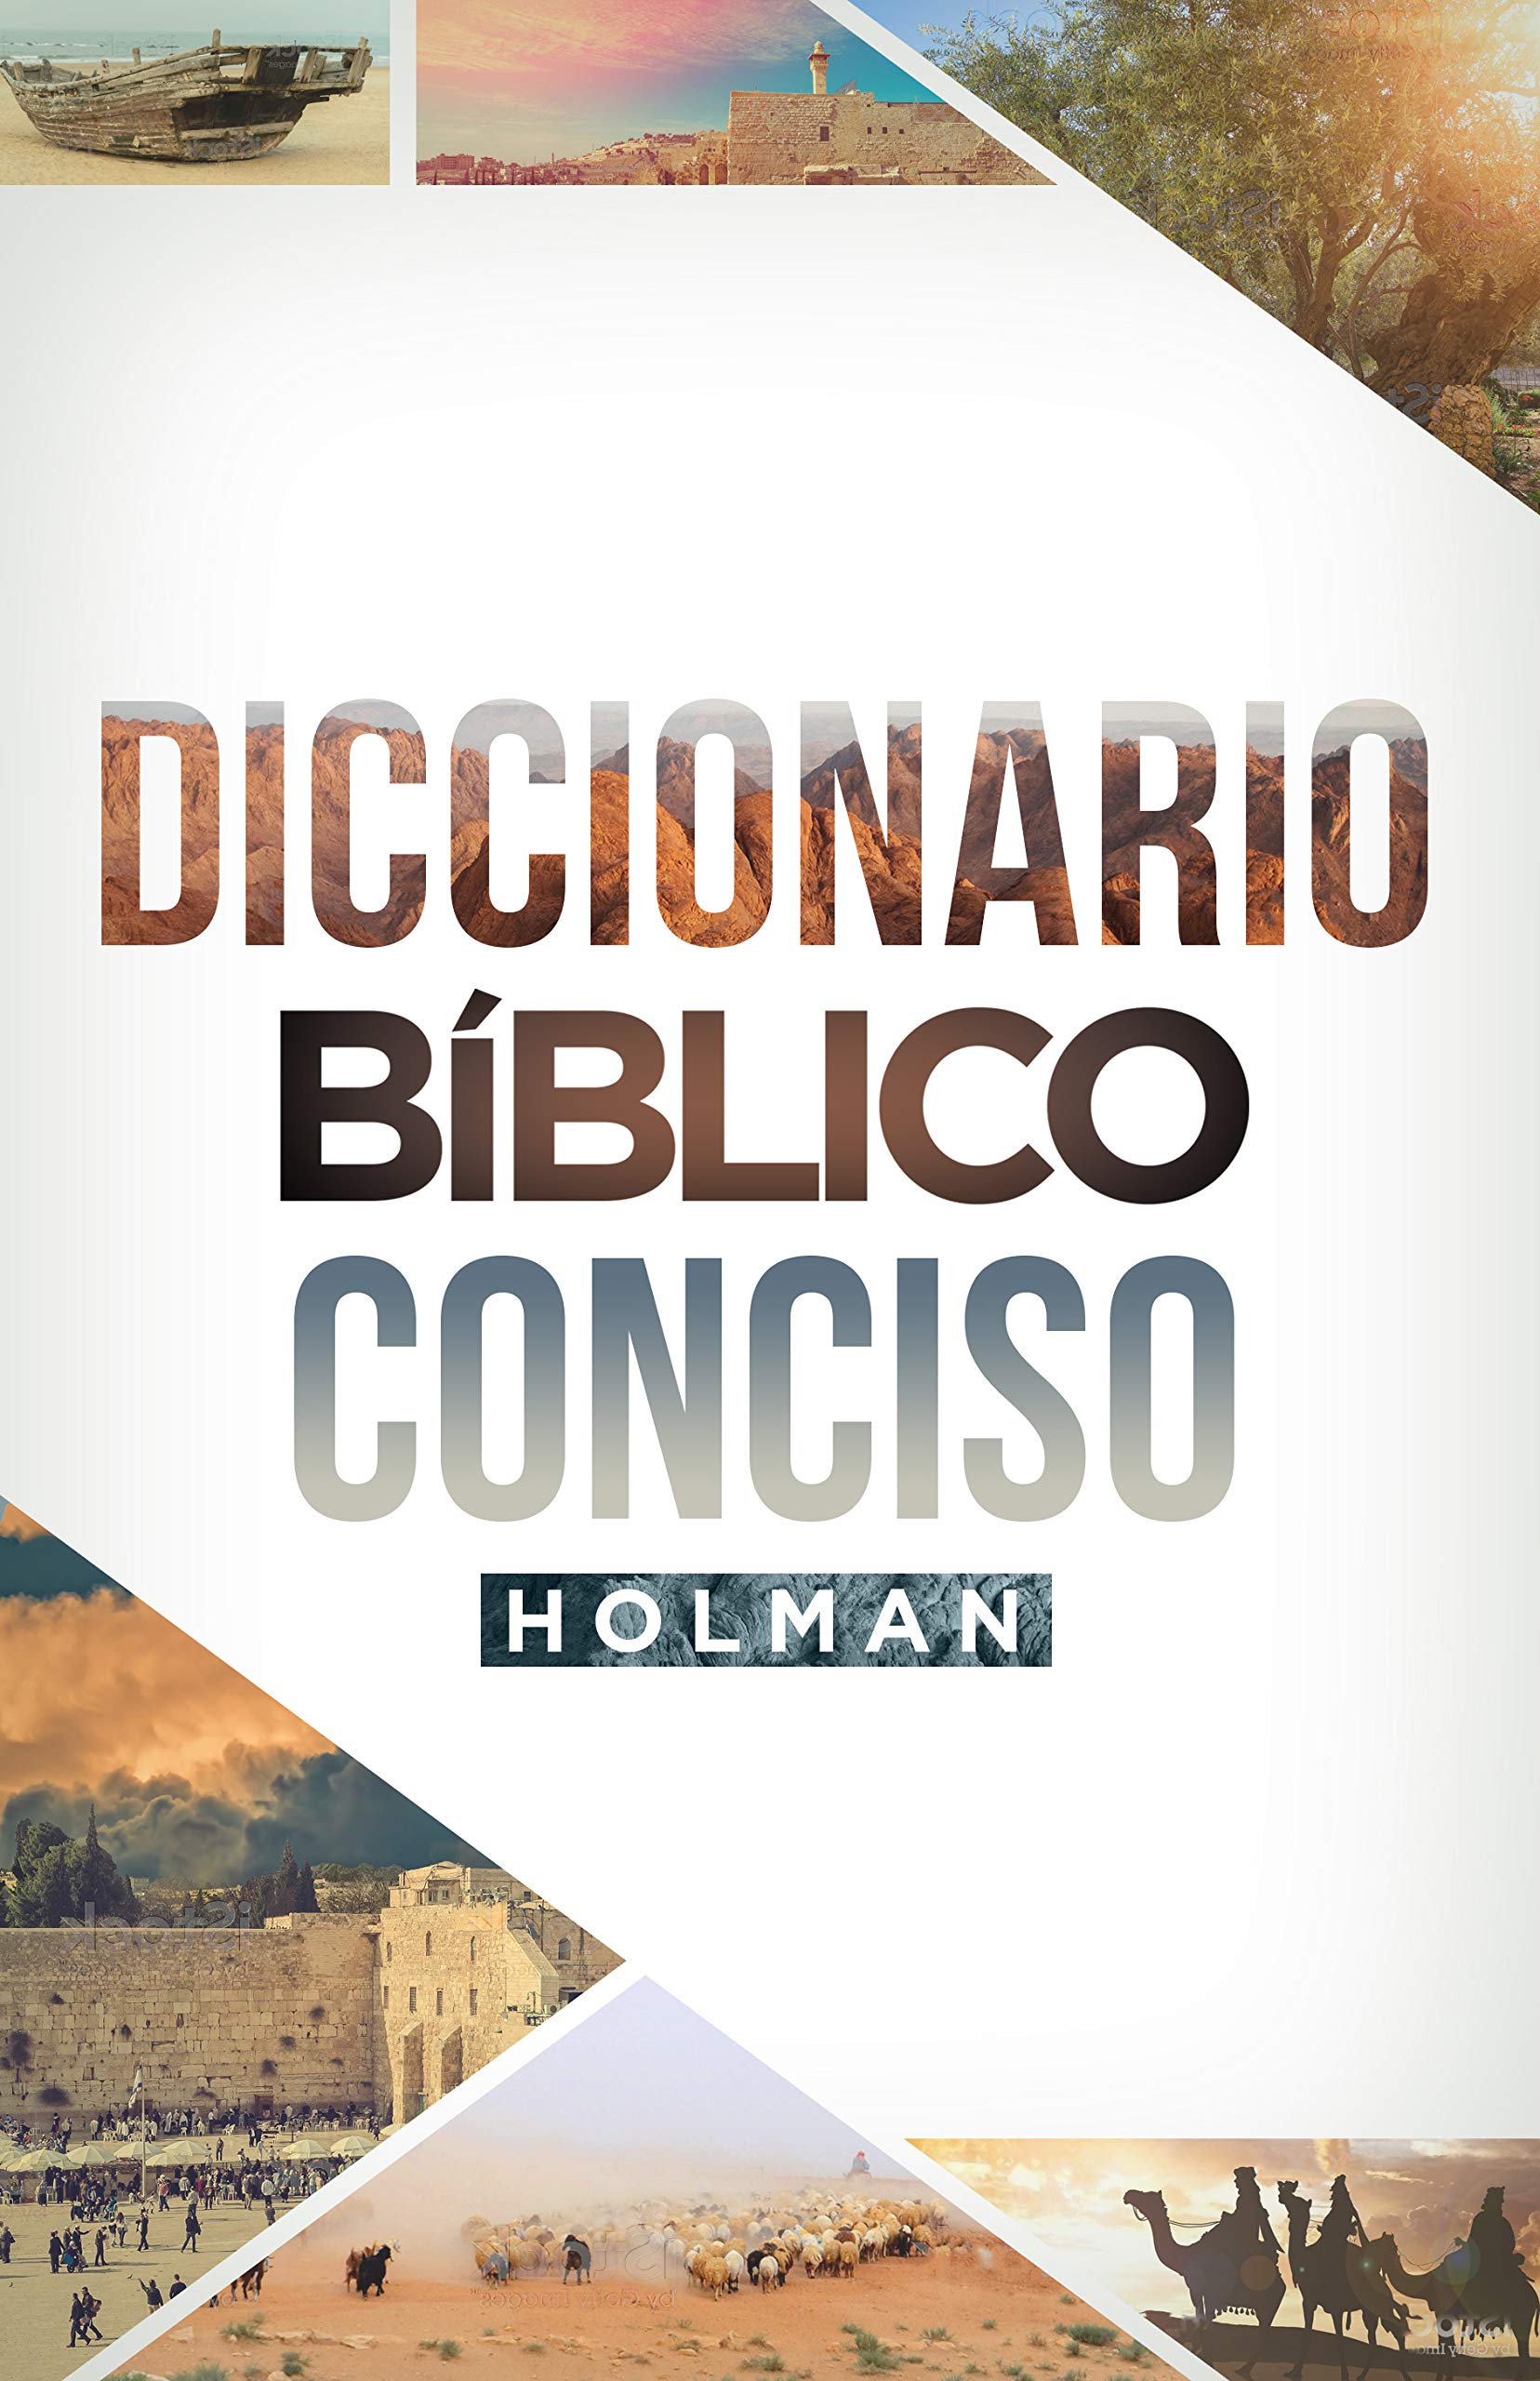 Diccionario Biblico Conciso Holman-Nueva edición - Librería Libros Cristianos - Libro